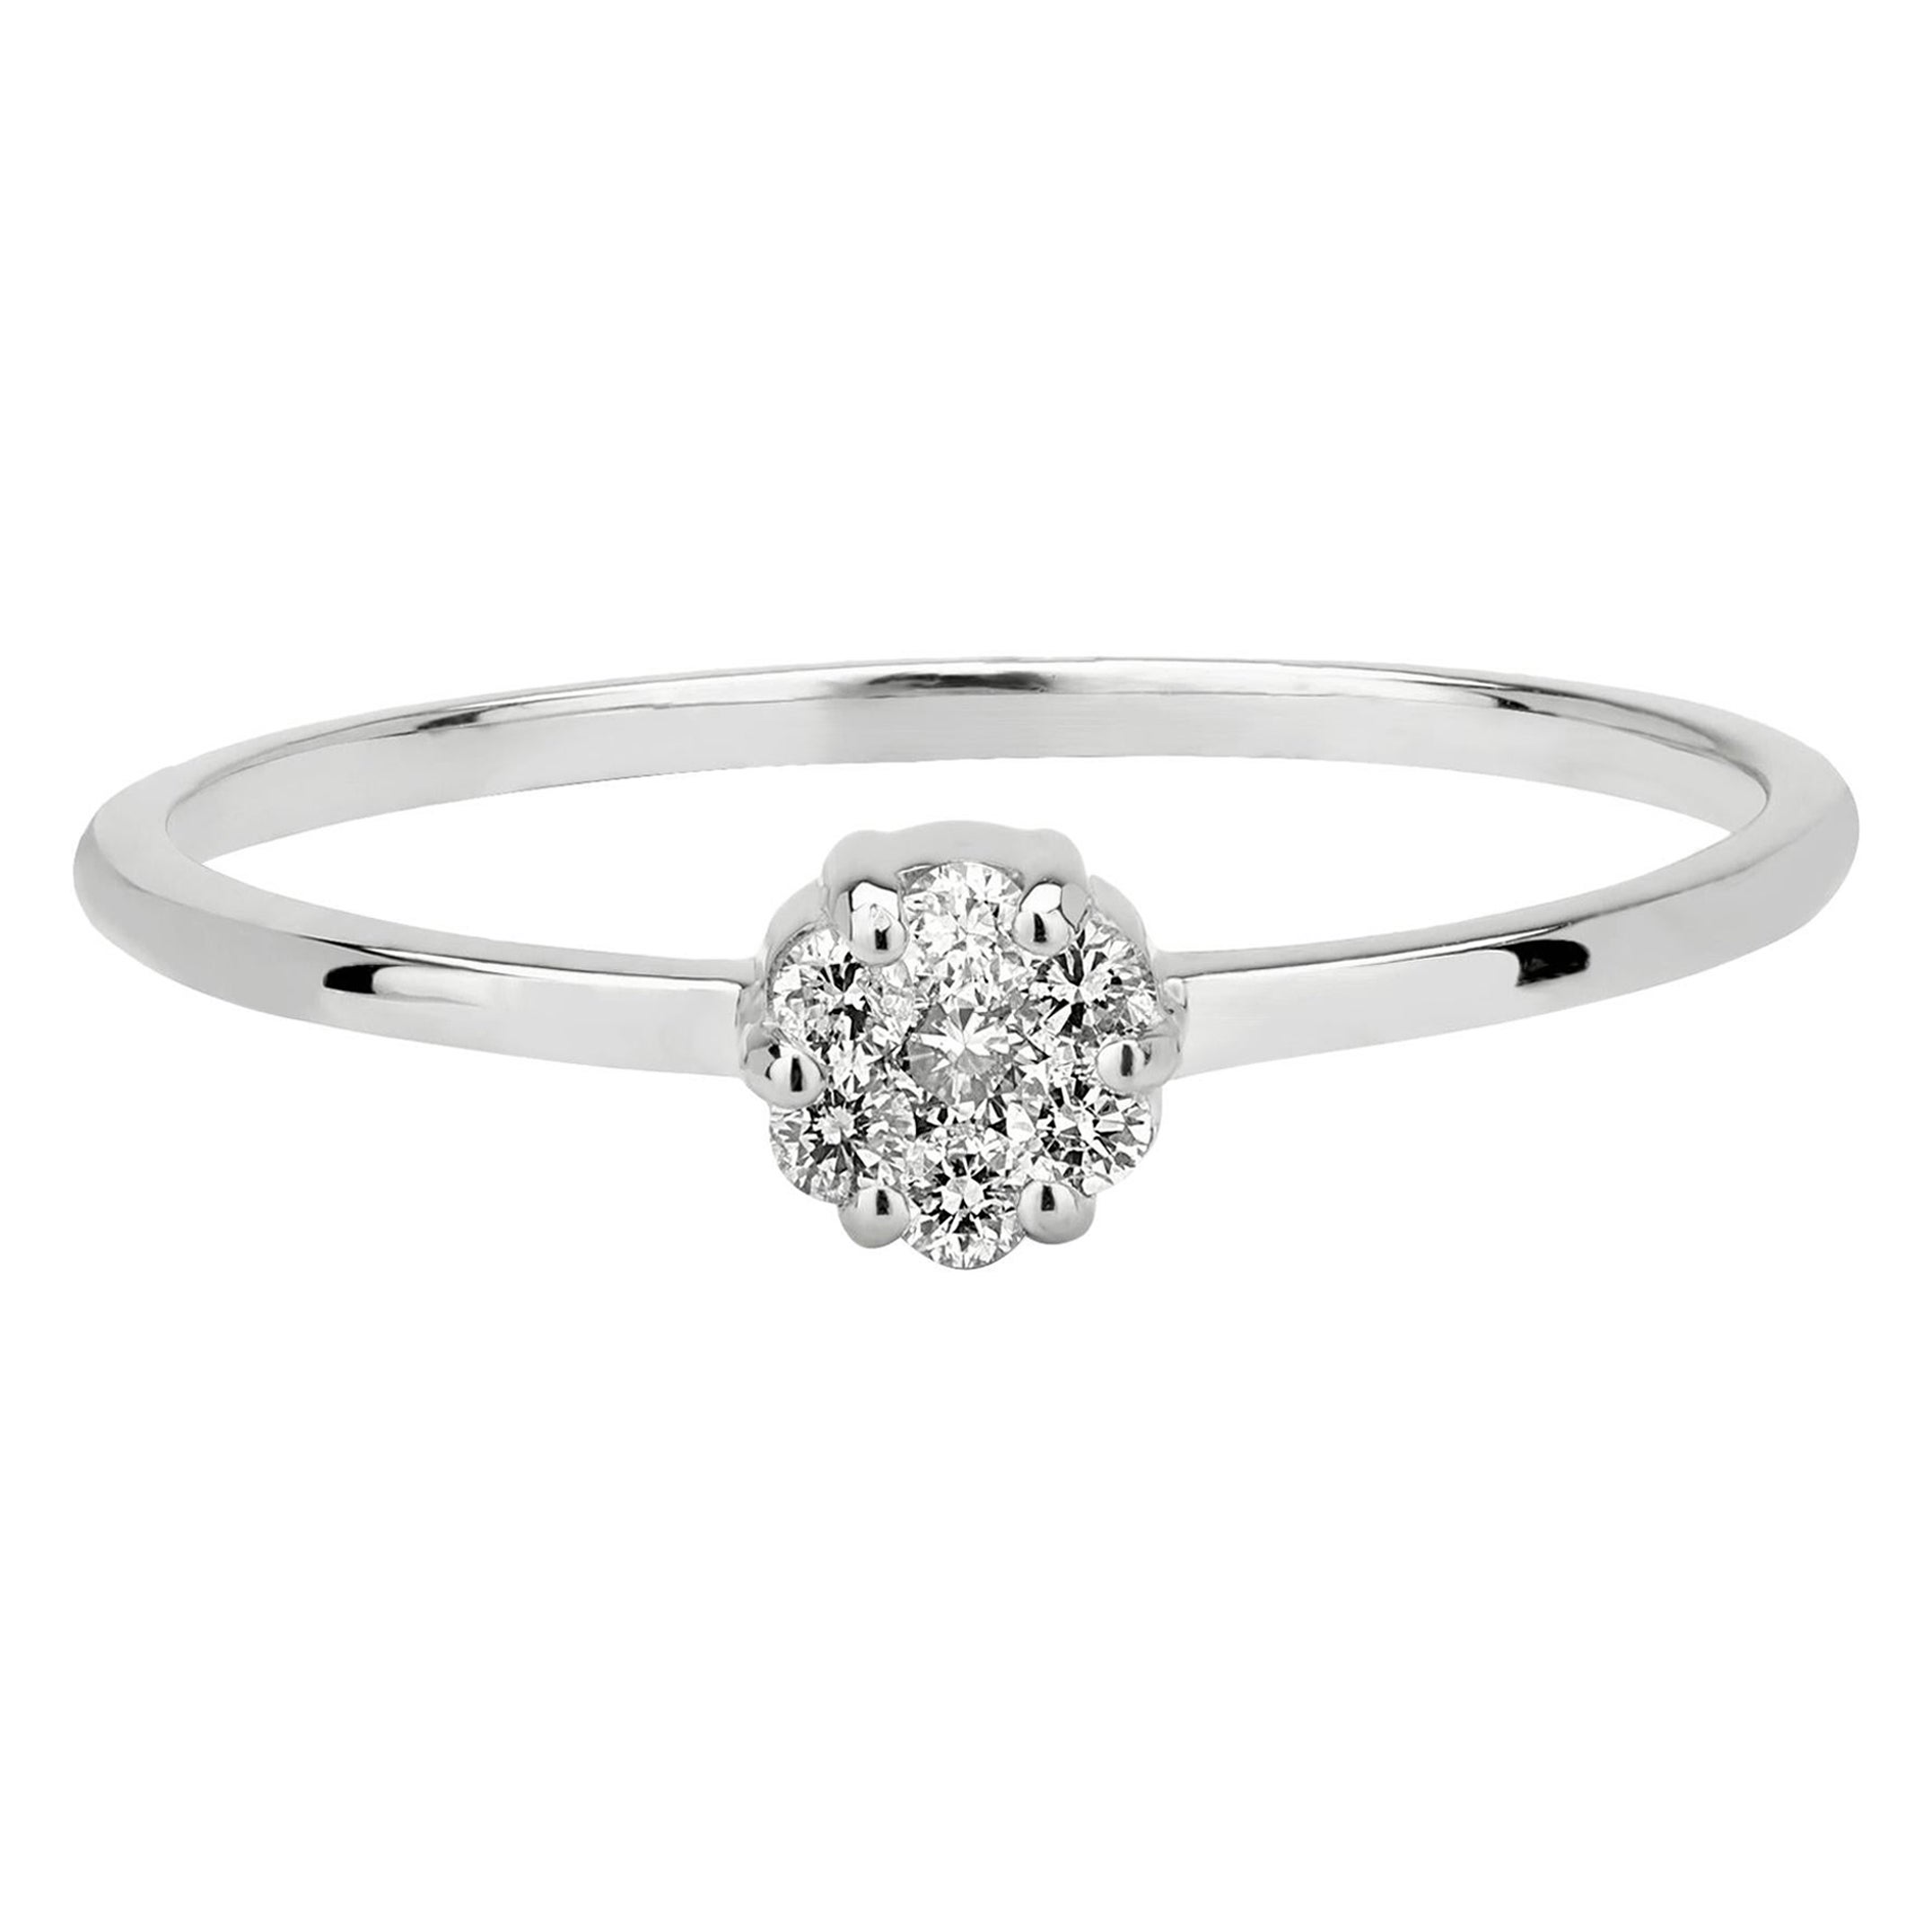 Luxle Diamond Cluster Ring in 18K White Gold